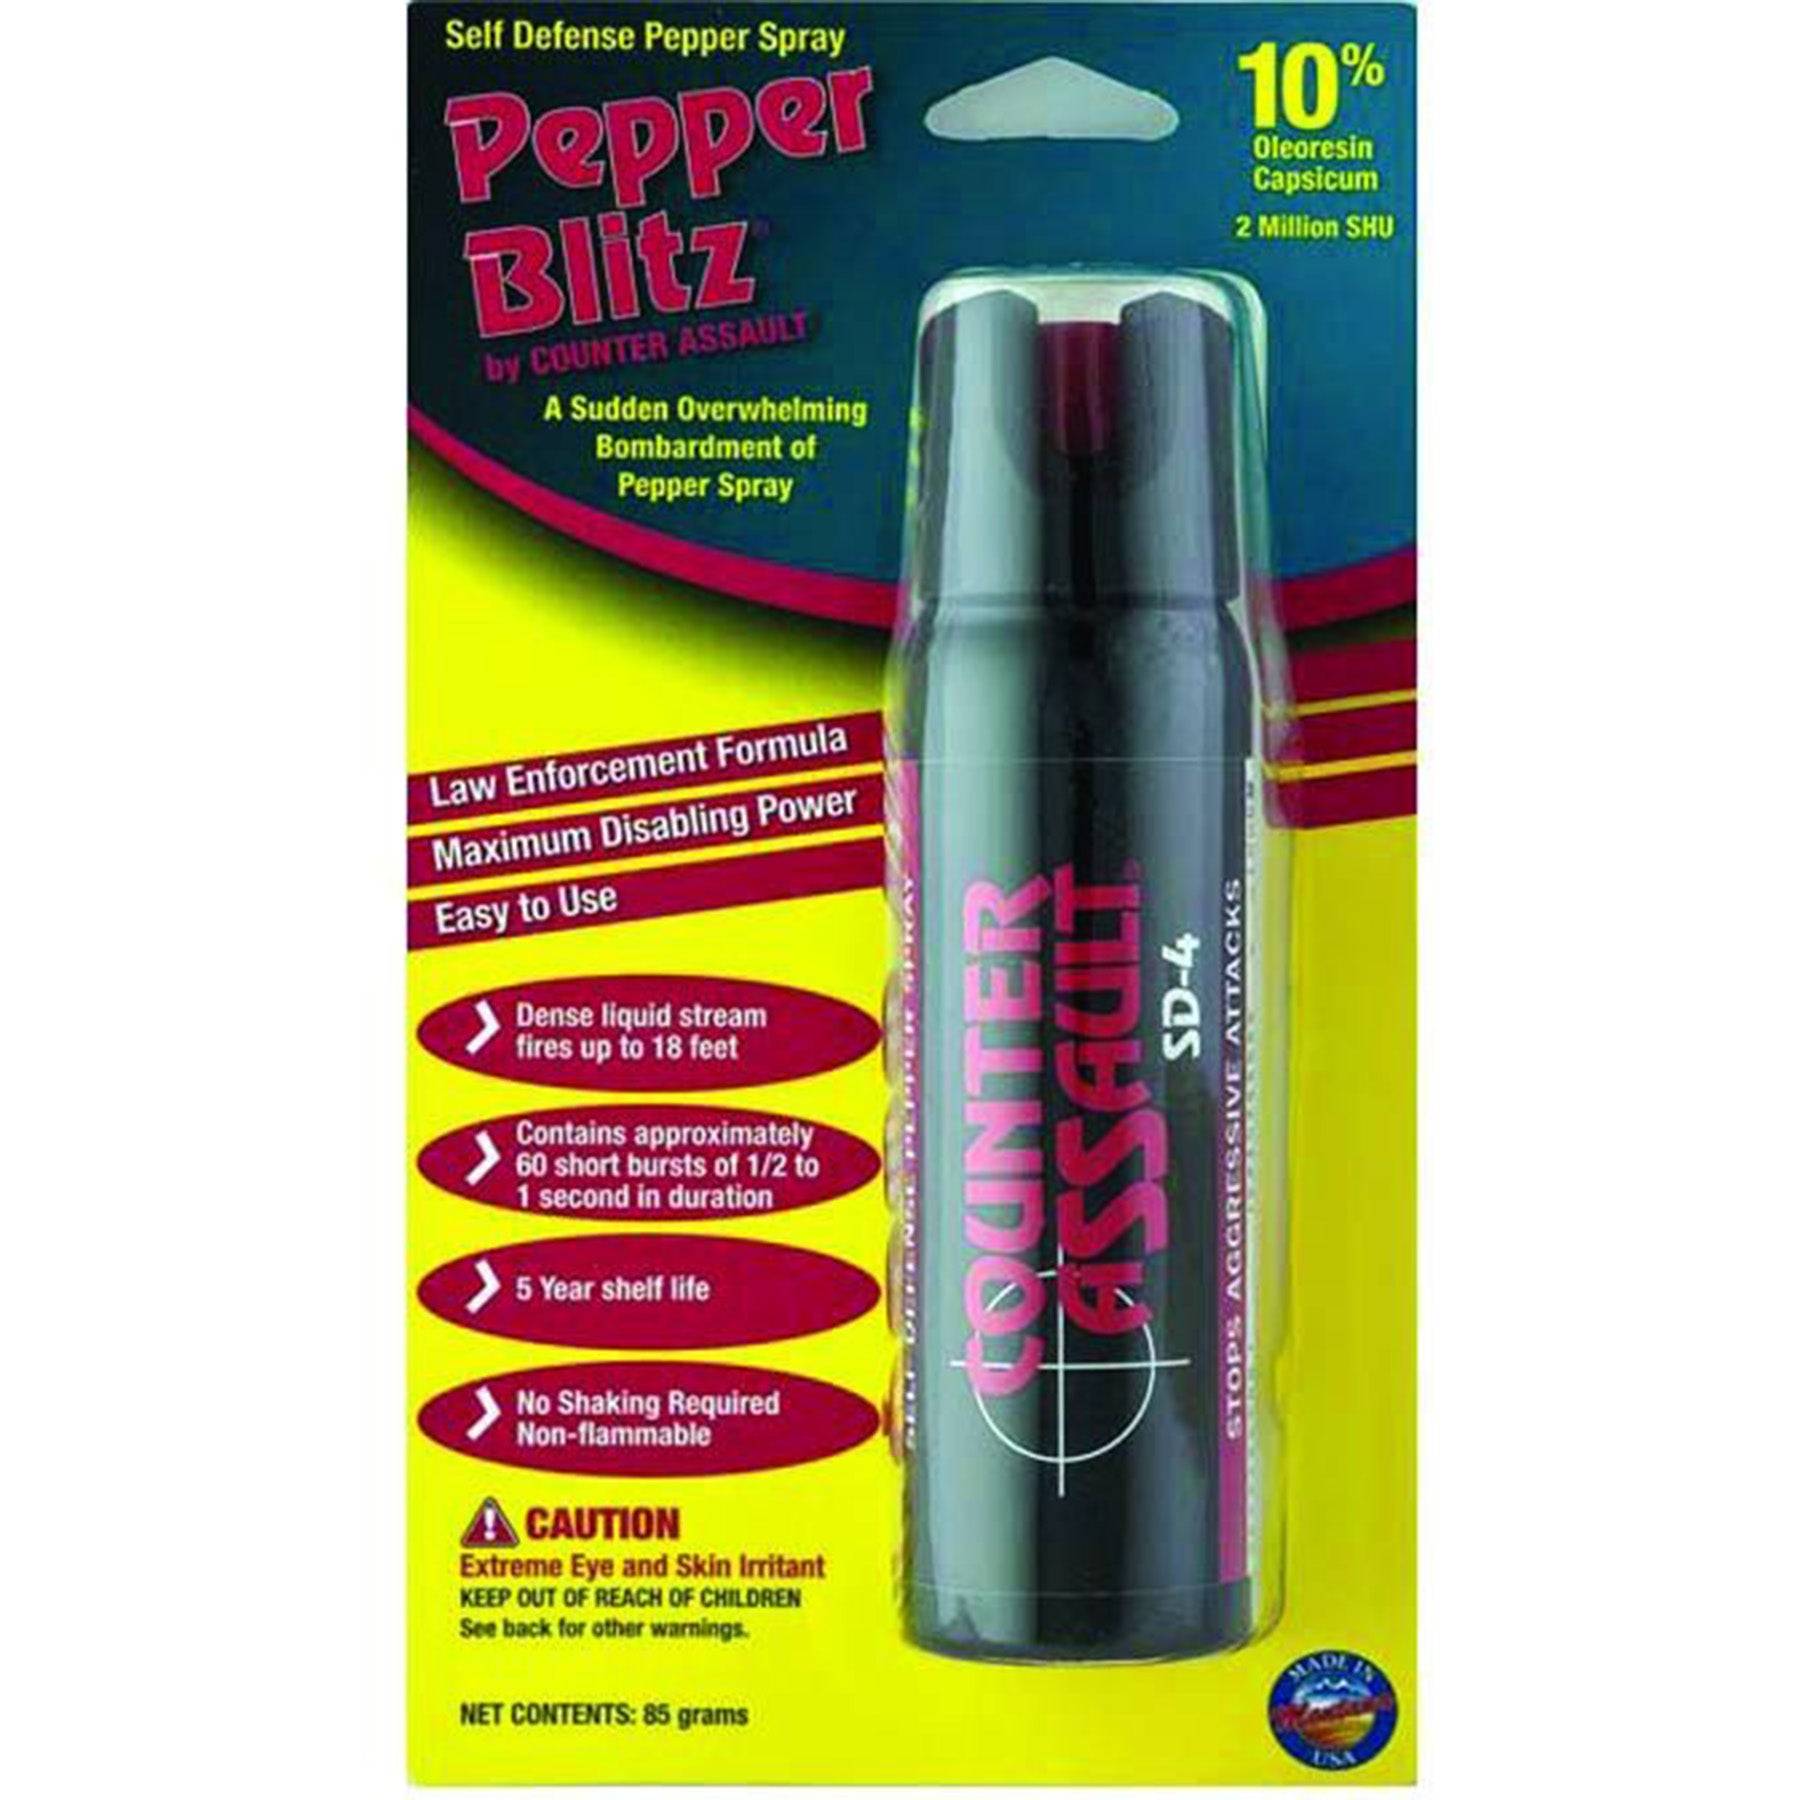 The 85 gram package of pepper spray